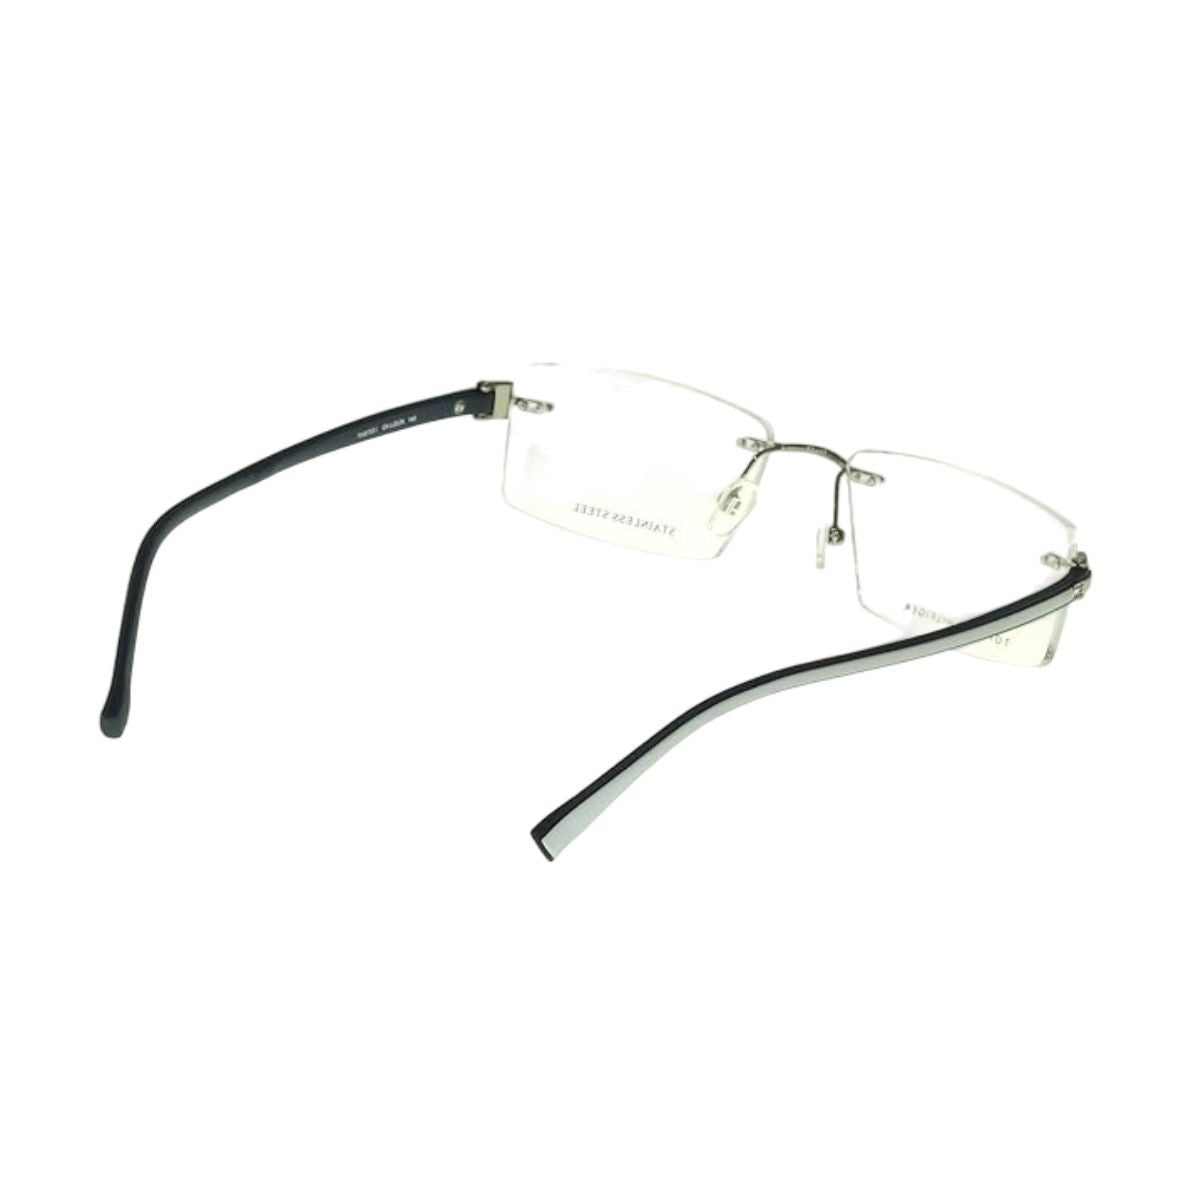 "Tommy Hilfiger 5733 C4 trendy eyewear frame for women's at optorium"